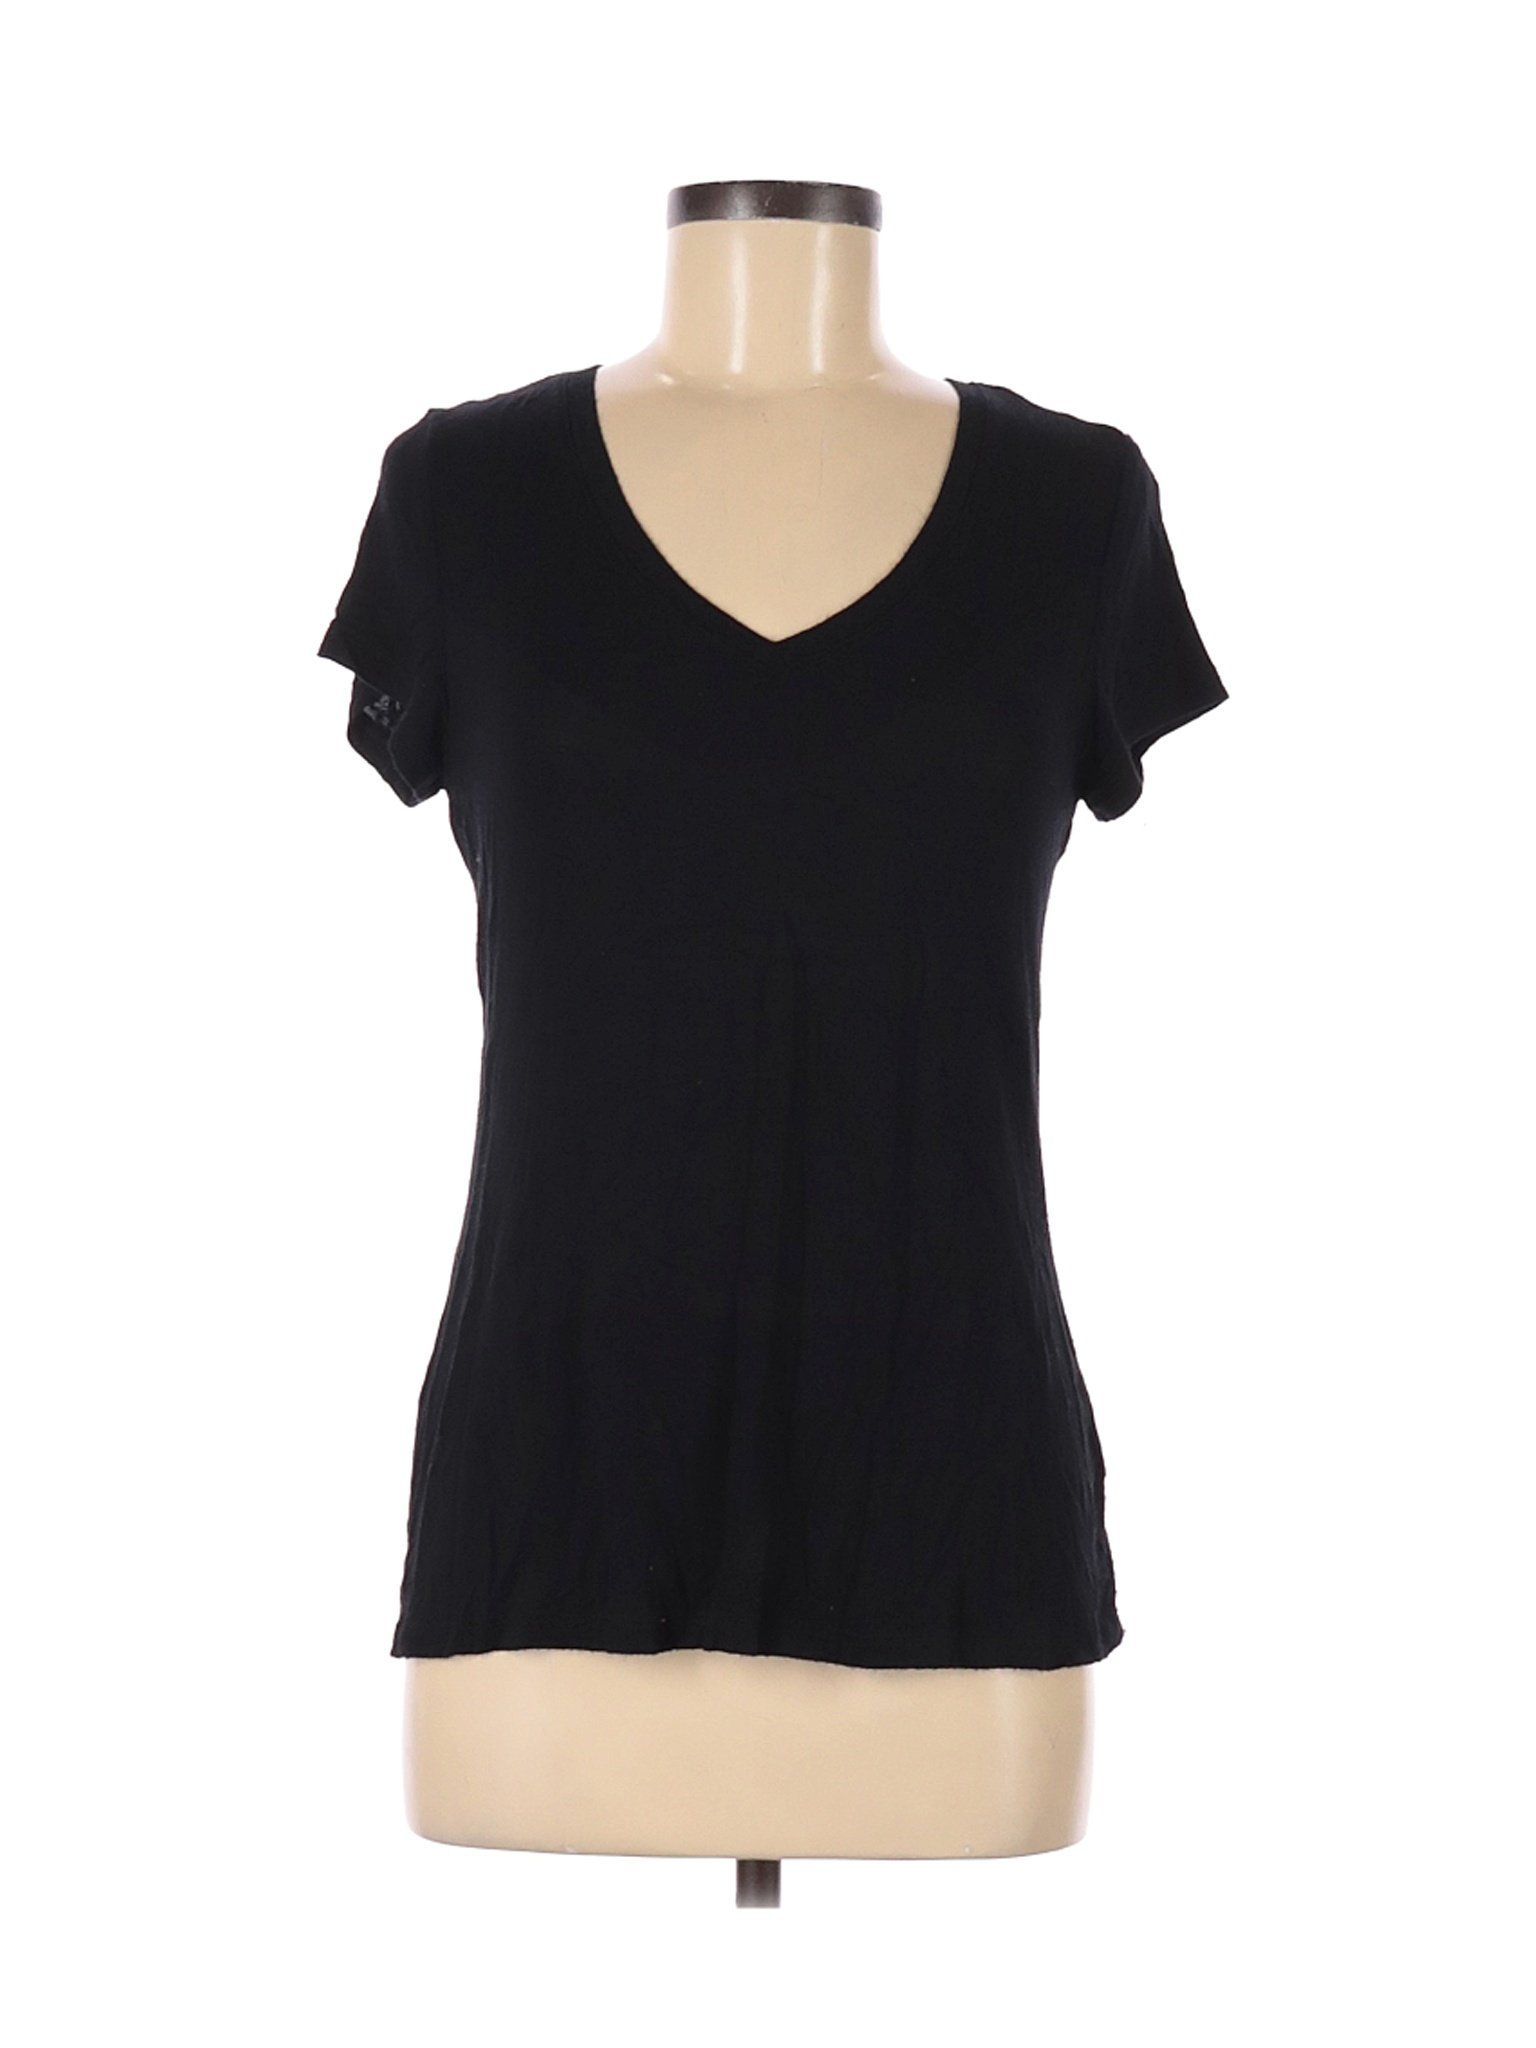 Apt. 9 Women Black Short Sleeve T-Shirt M | eBay